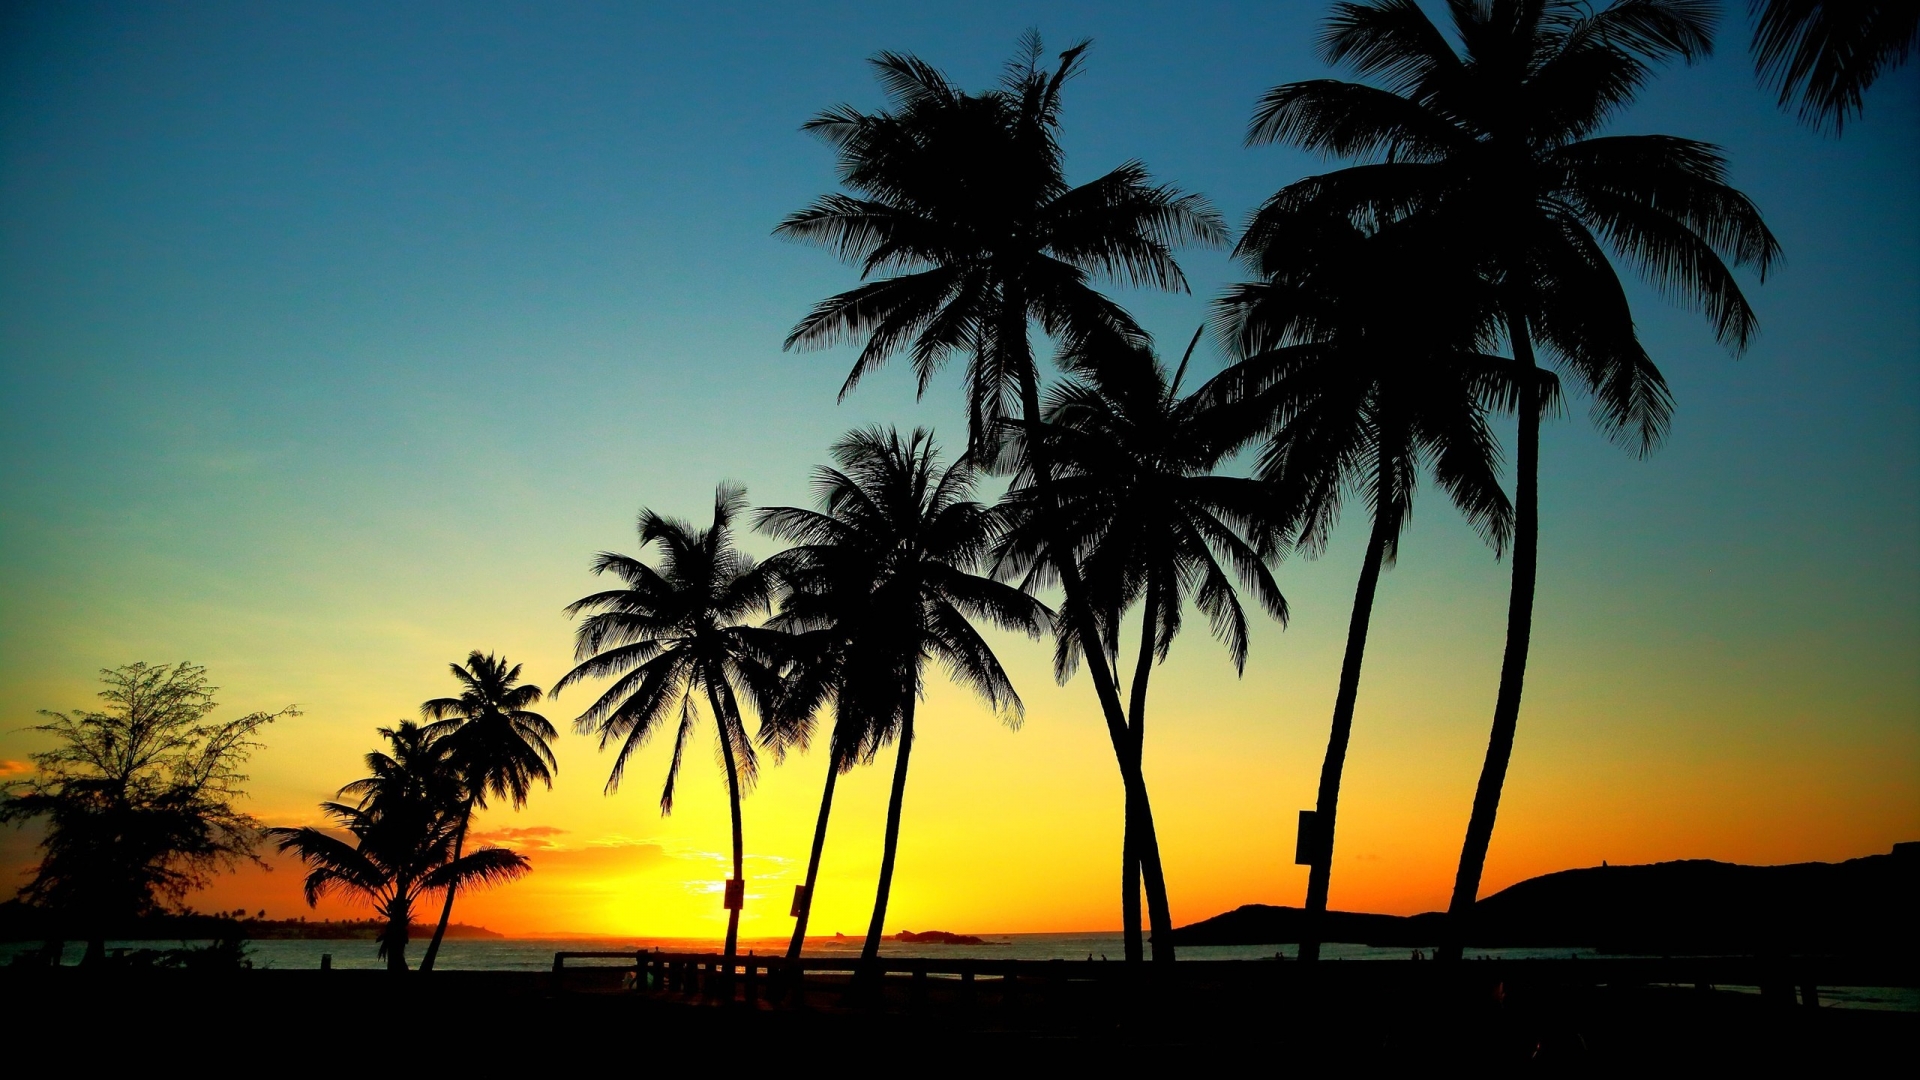 Seaside Palm Trees Sunset Wallpaper Hd For Desktop - Trees In A Sunset -  1920x1080 Wallpaper 